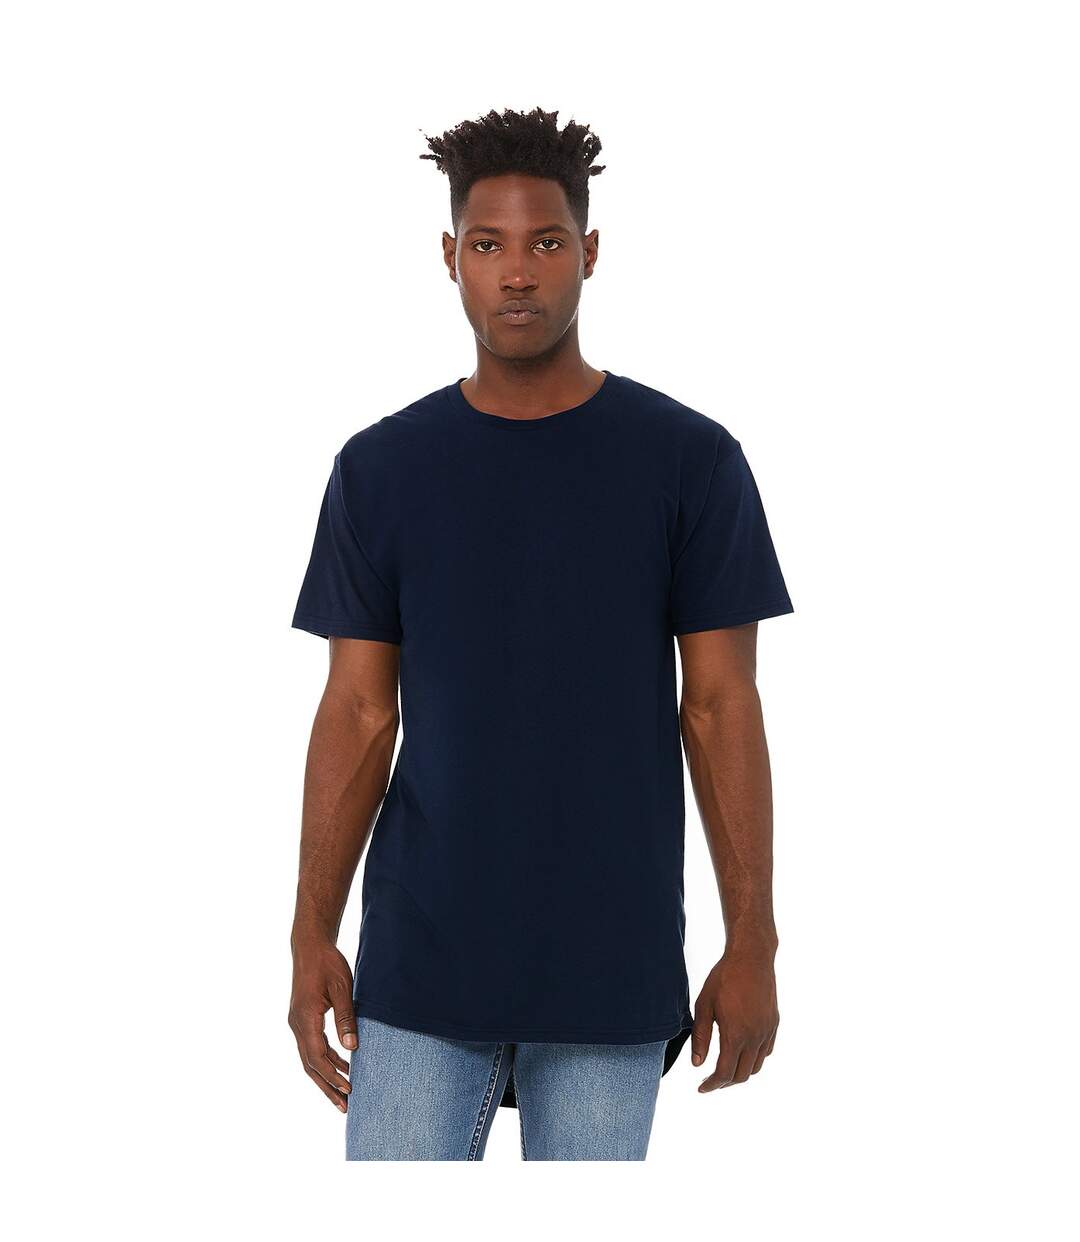 Bella + Canvas Urban - T-shirt long - Homme (Bleu marine) - UTRW4914